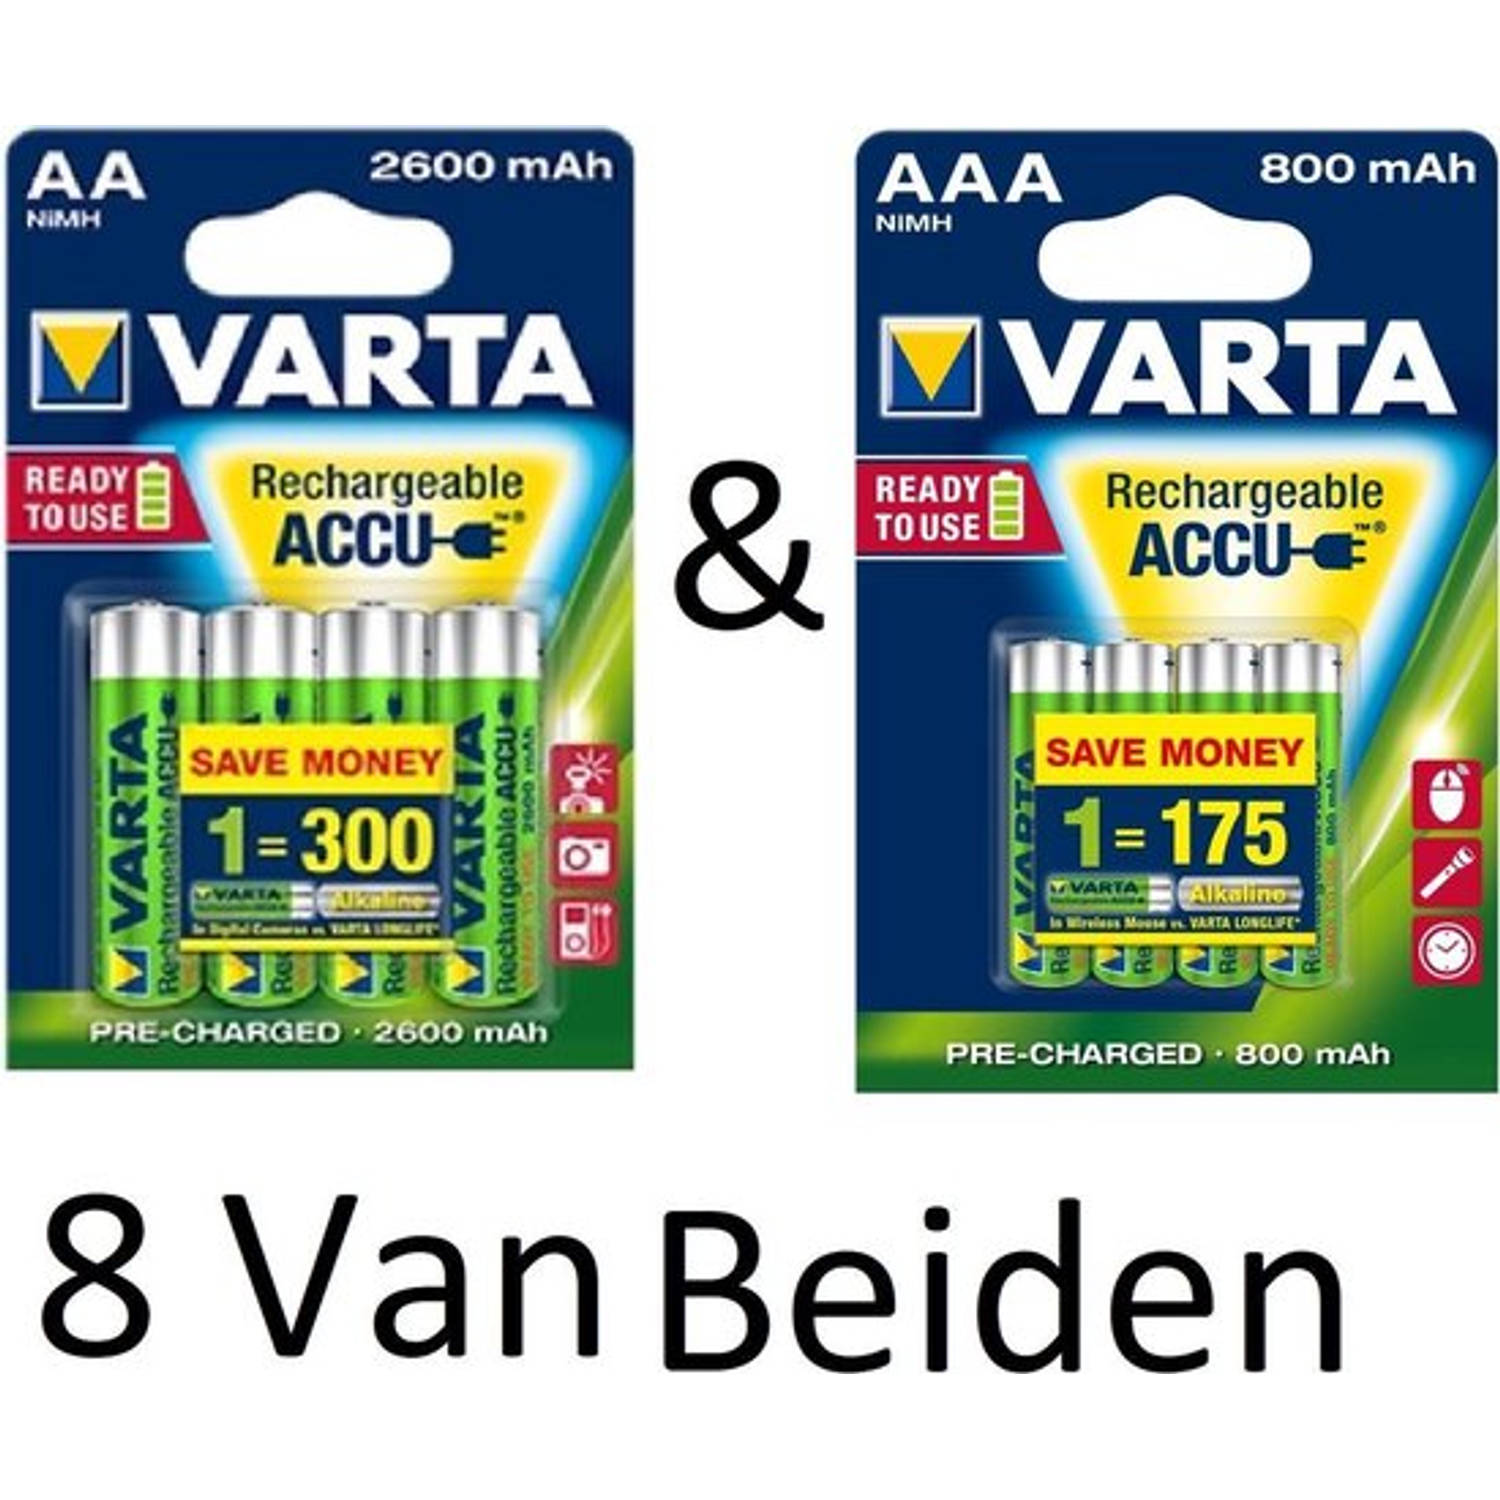 Varta (8 Van Beiden) Aa & Aaa Oplaadbare Batterijen Combi Aanbieding 2600 Mah & 800 Mah